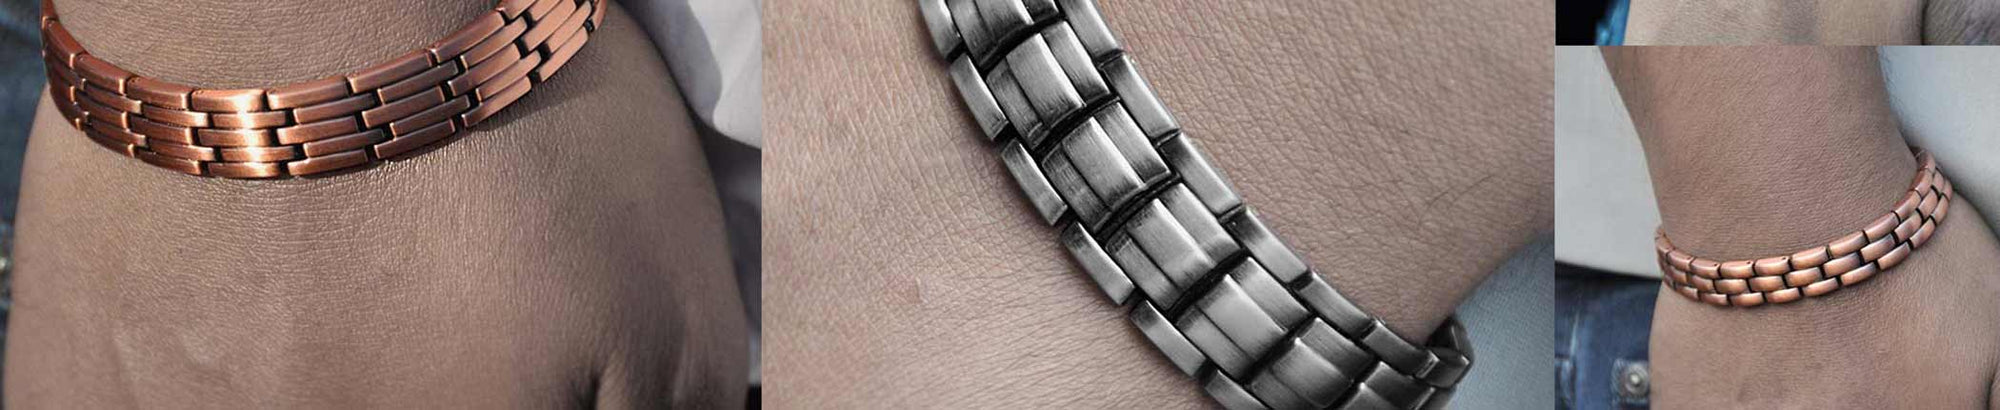 Ladies’ Magnetic Bracelets vs Men’s vs Gender Neutral Health Bracelets